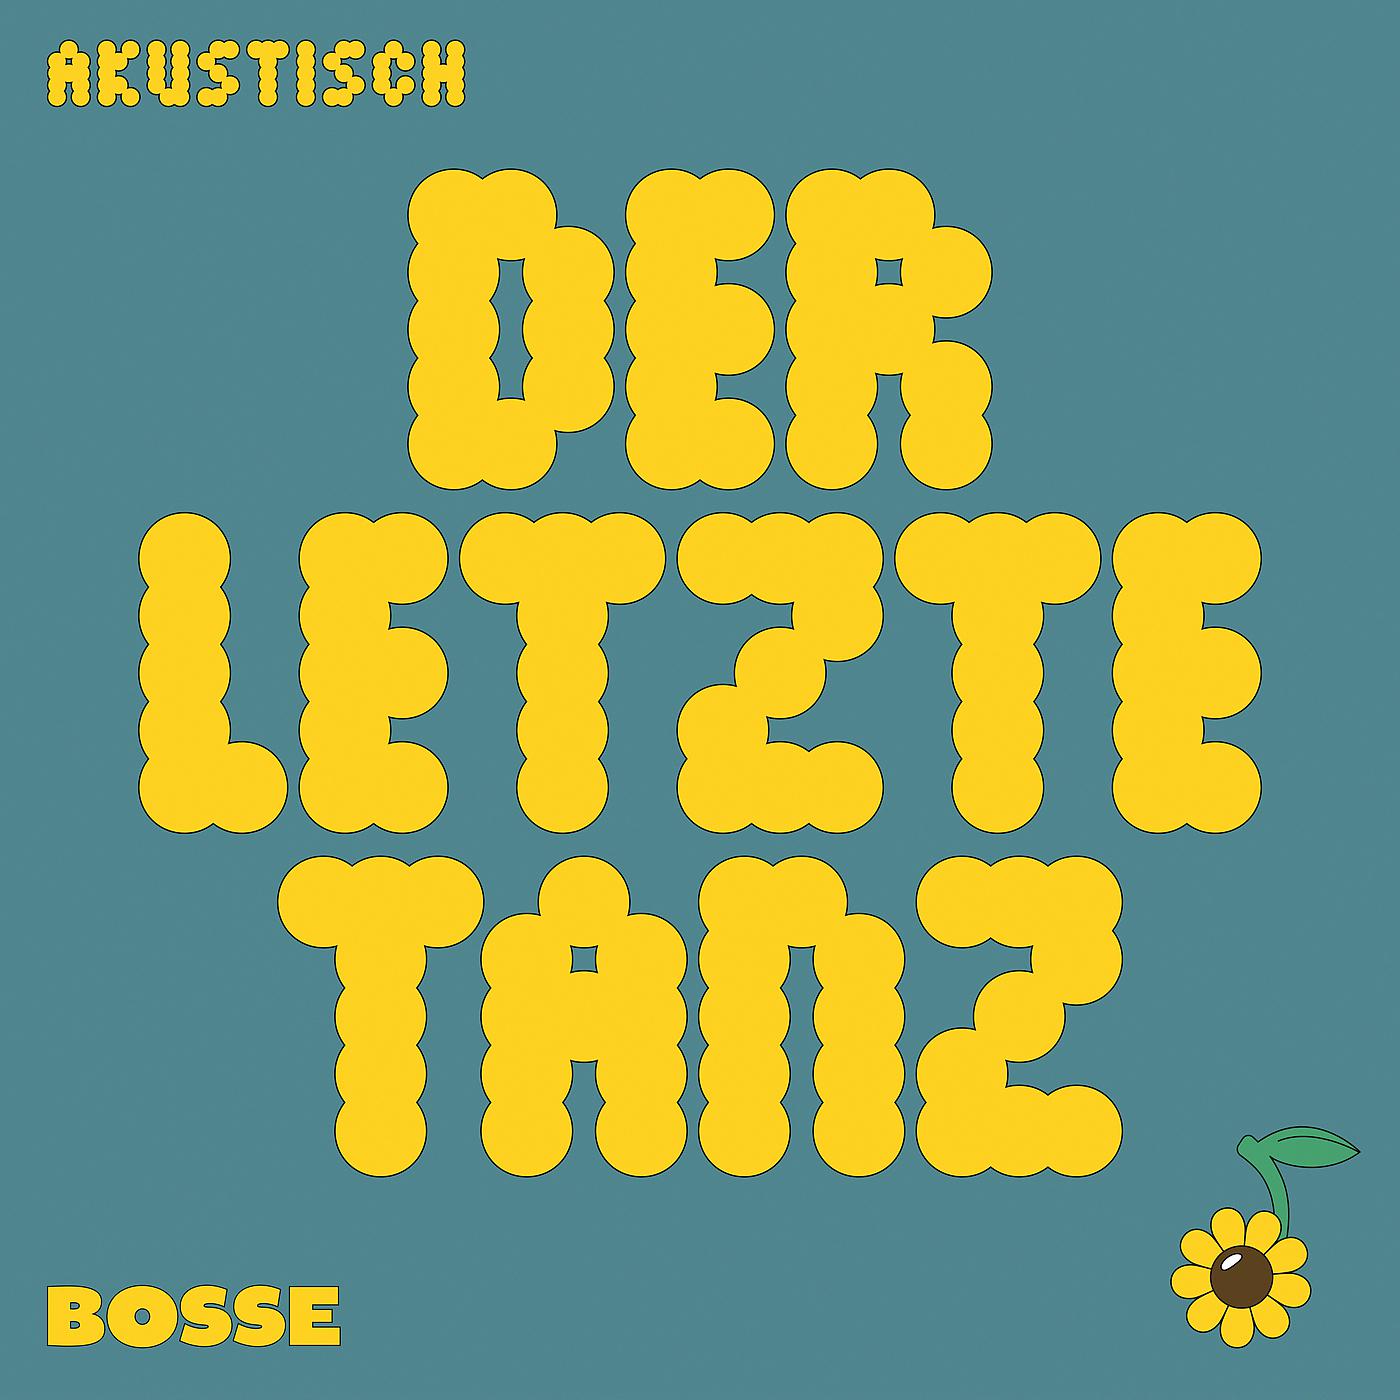 Постер альбома Der letzte Tanz